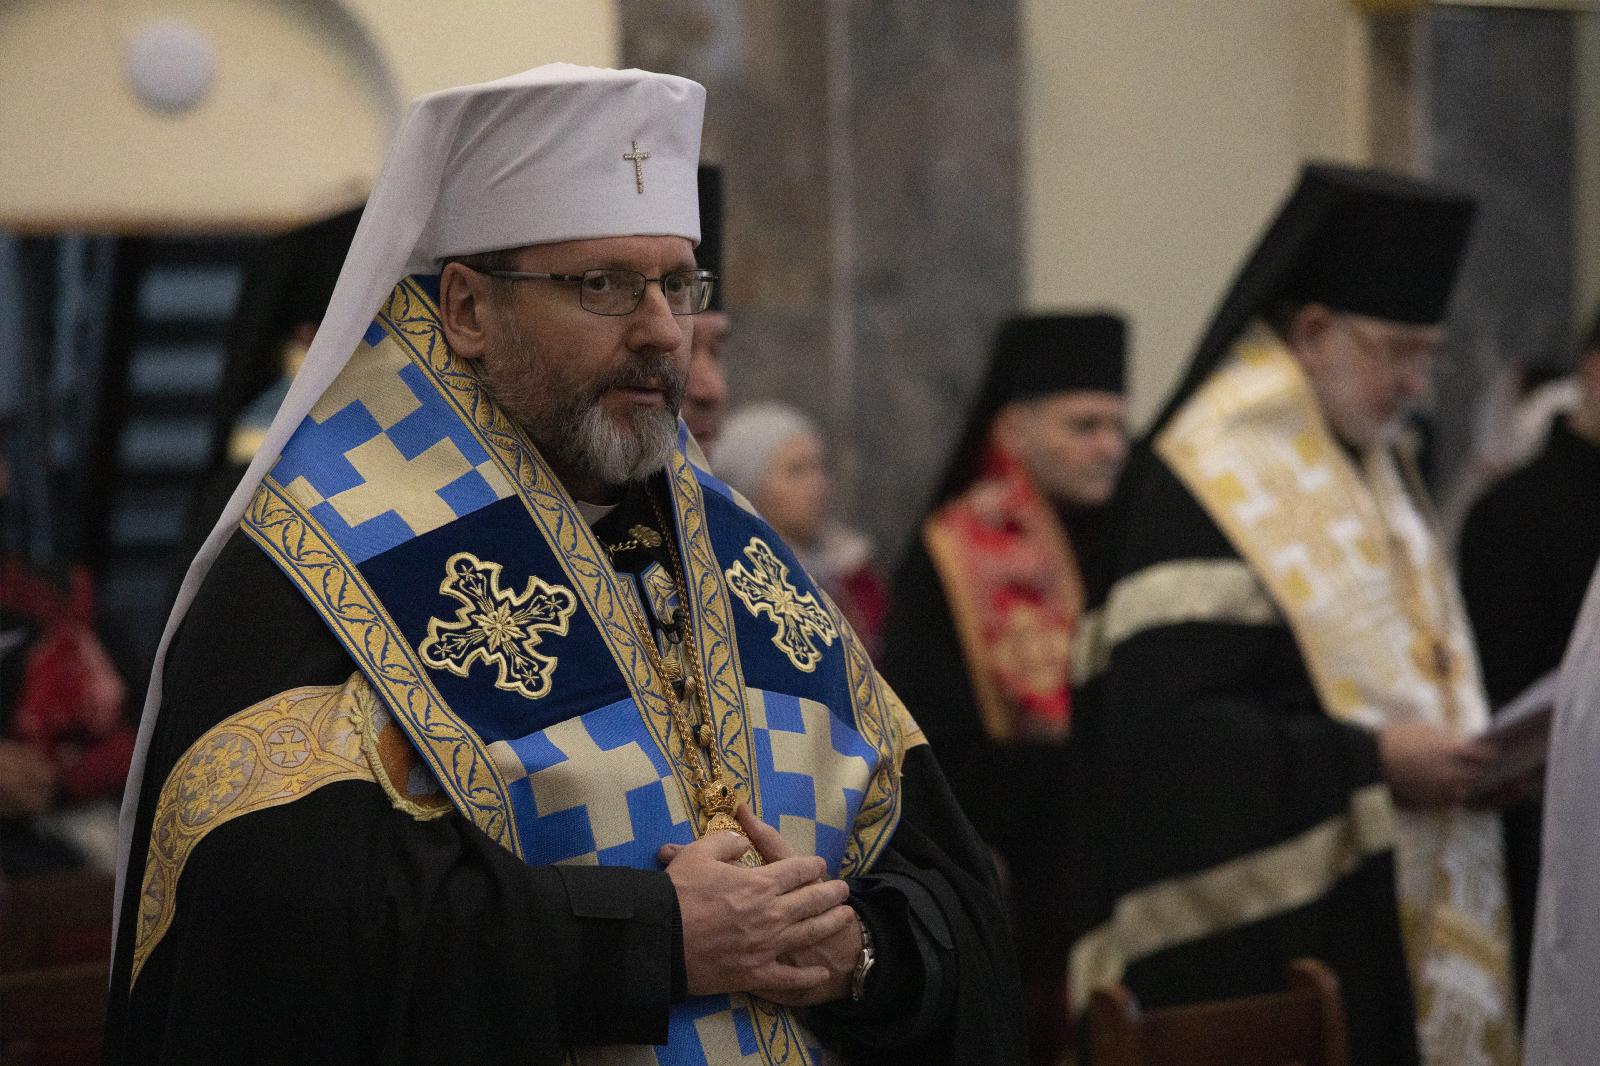 Church leaders warn of wider threats from Ukraine war